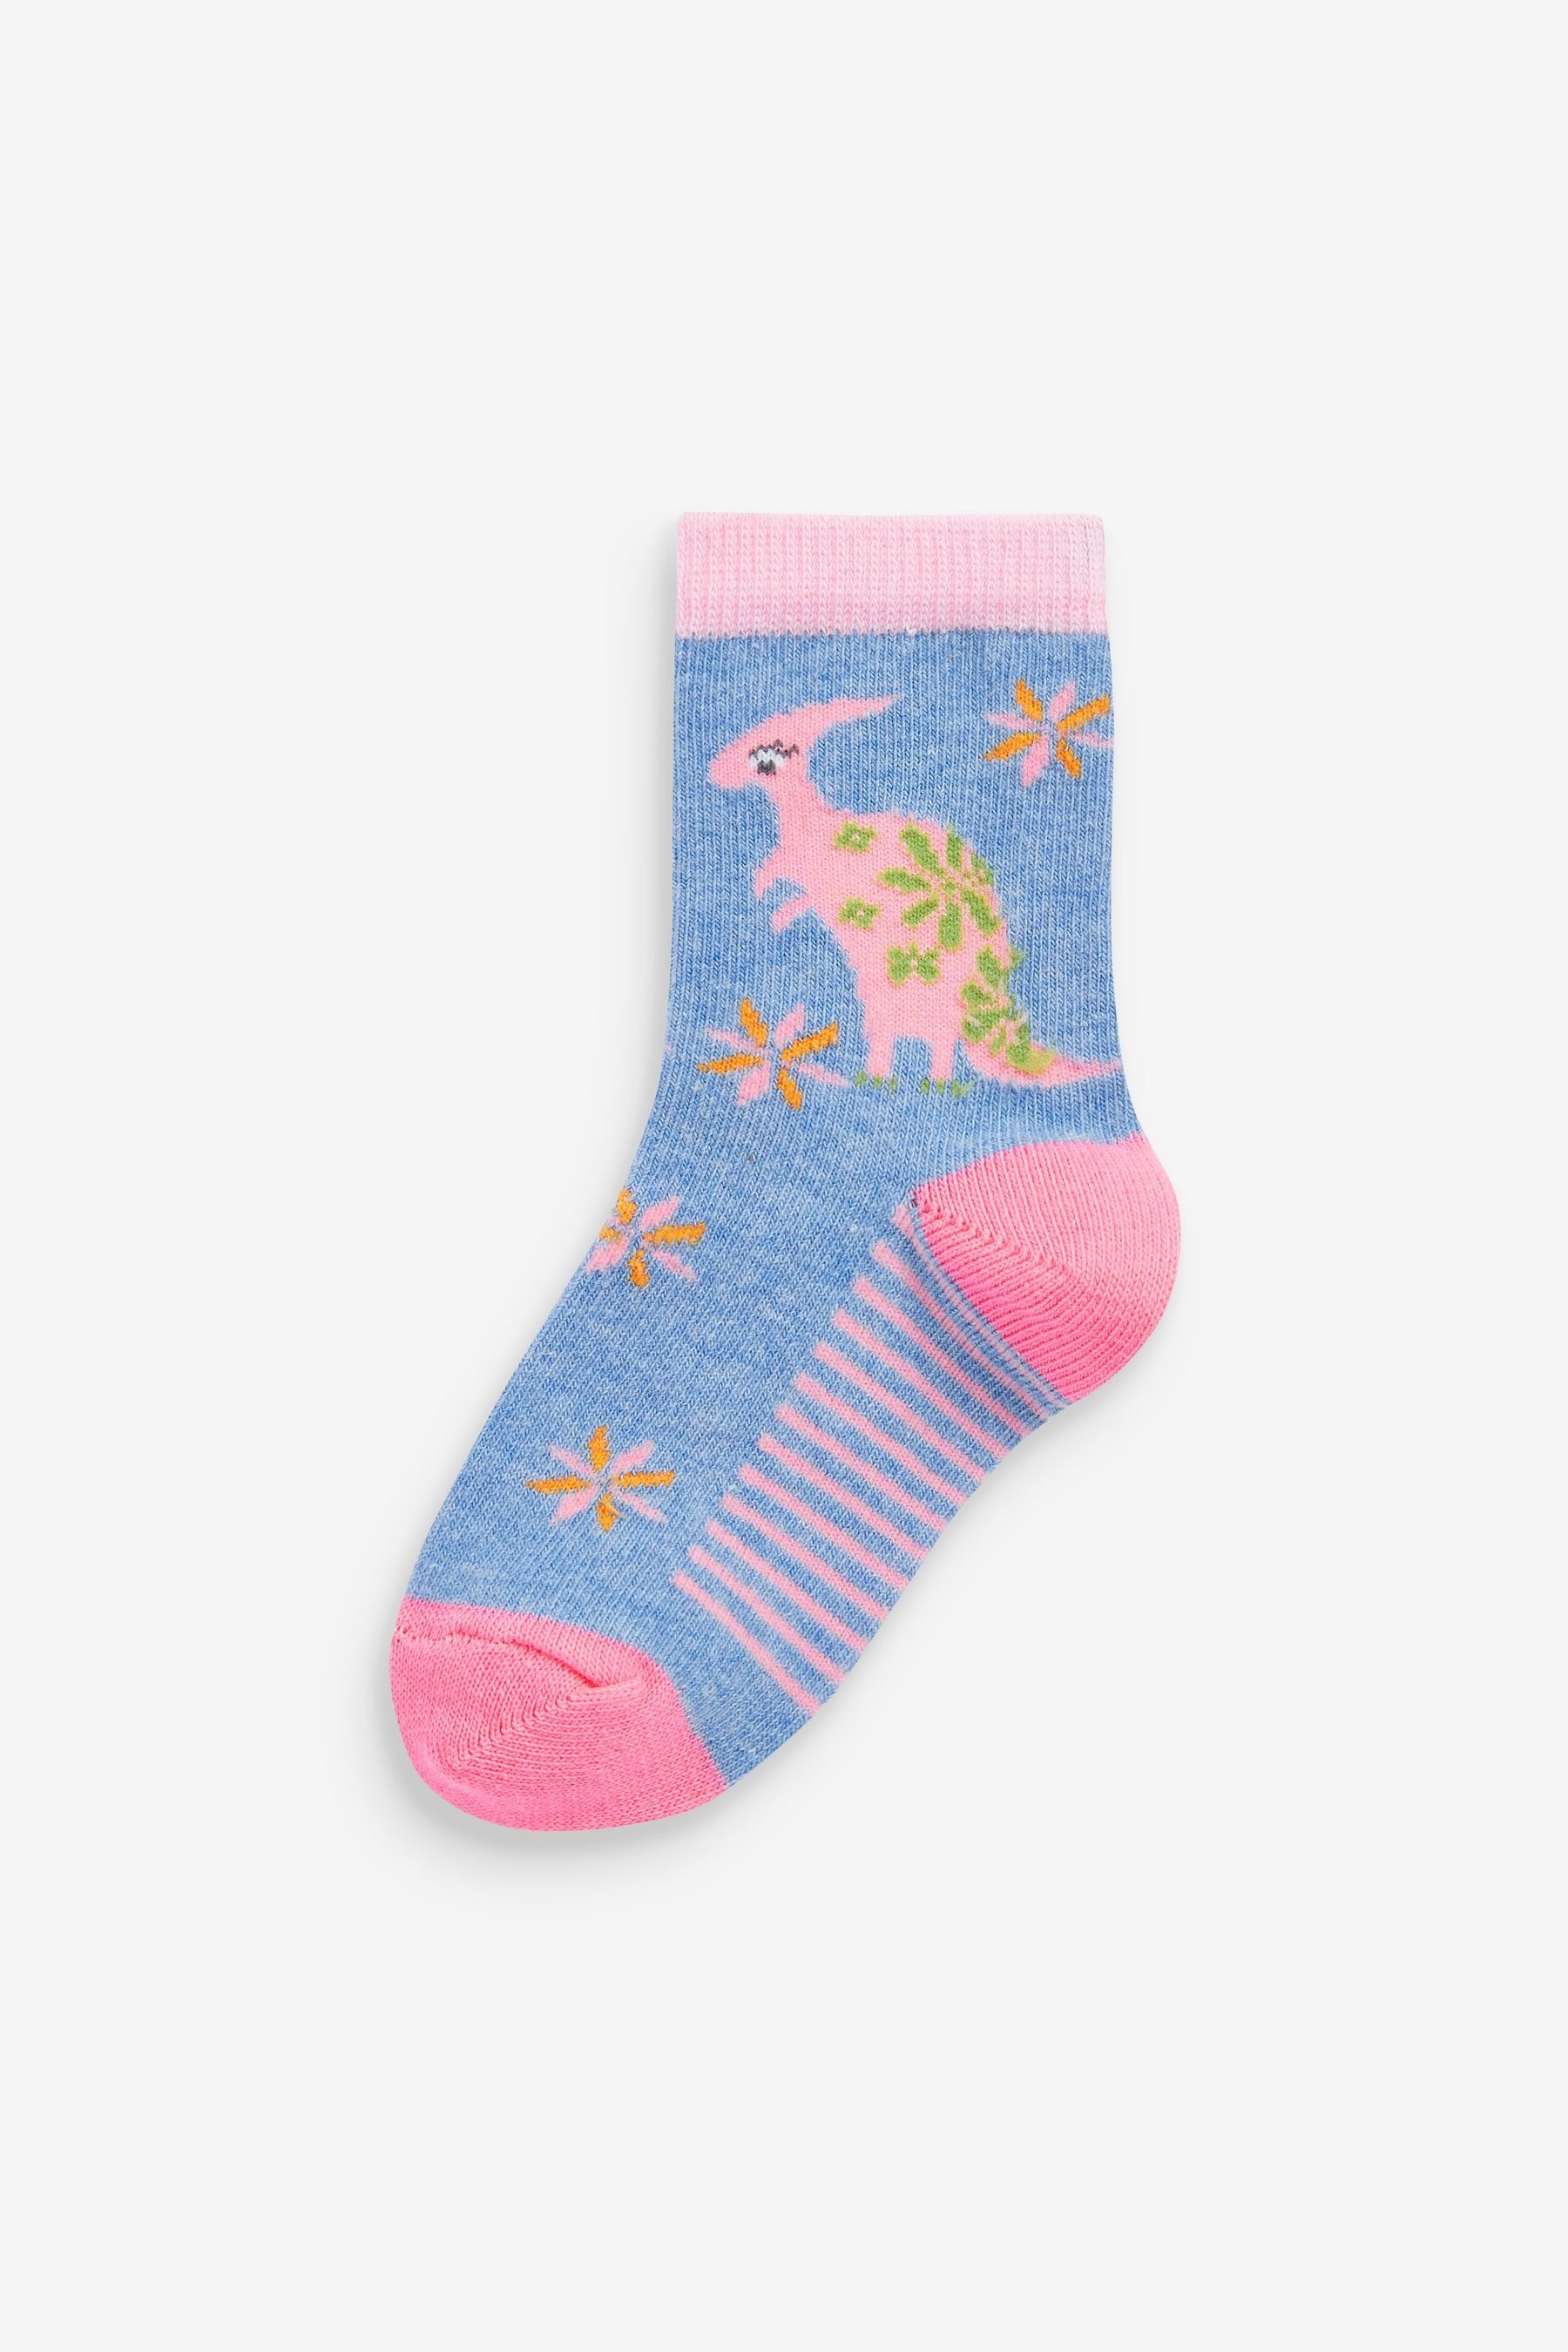 Wäsche/Bademode Socken Next Kurzsocken 5 x Socken mit Regenbogen/Dinosauriermotiv (5-Paar)